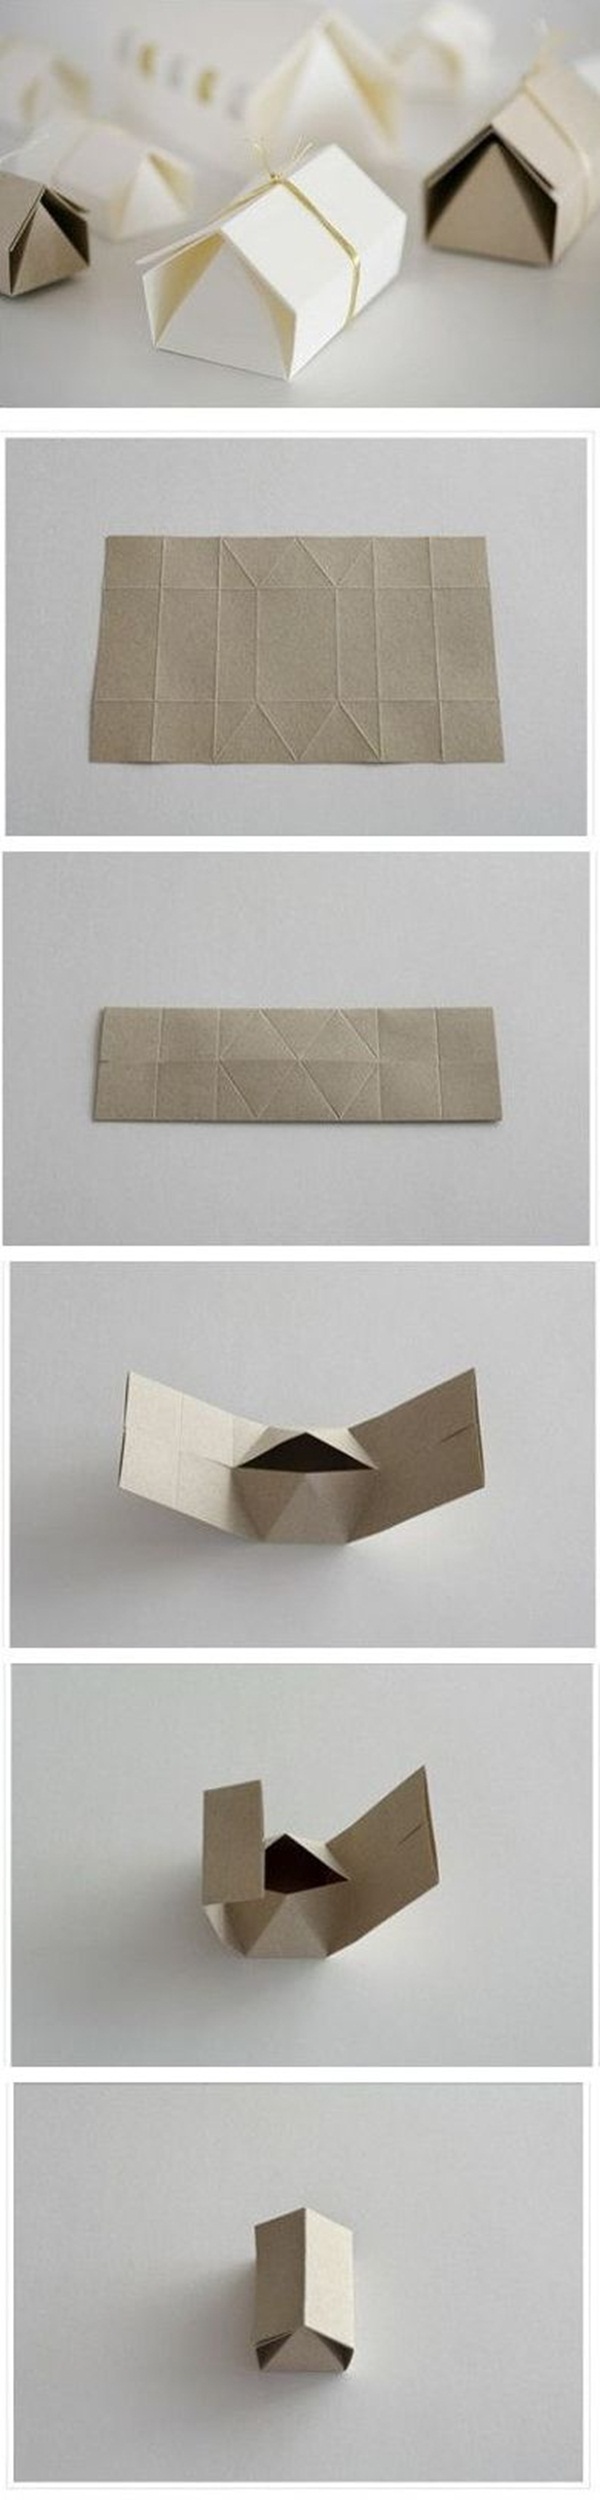 Easy-Origami-for-Kids21